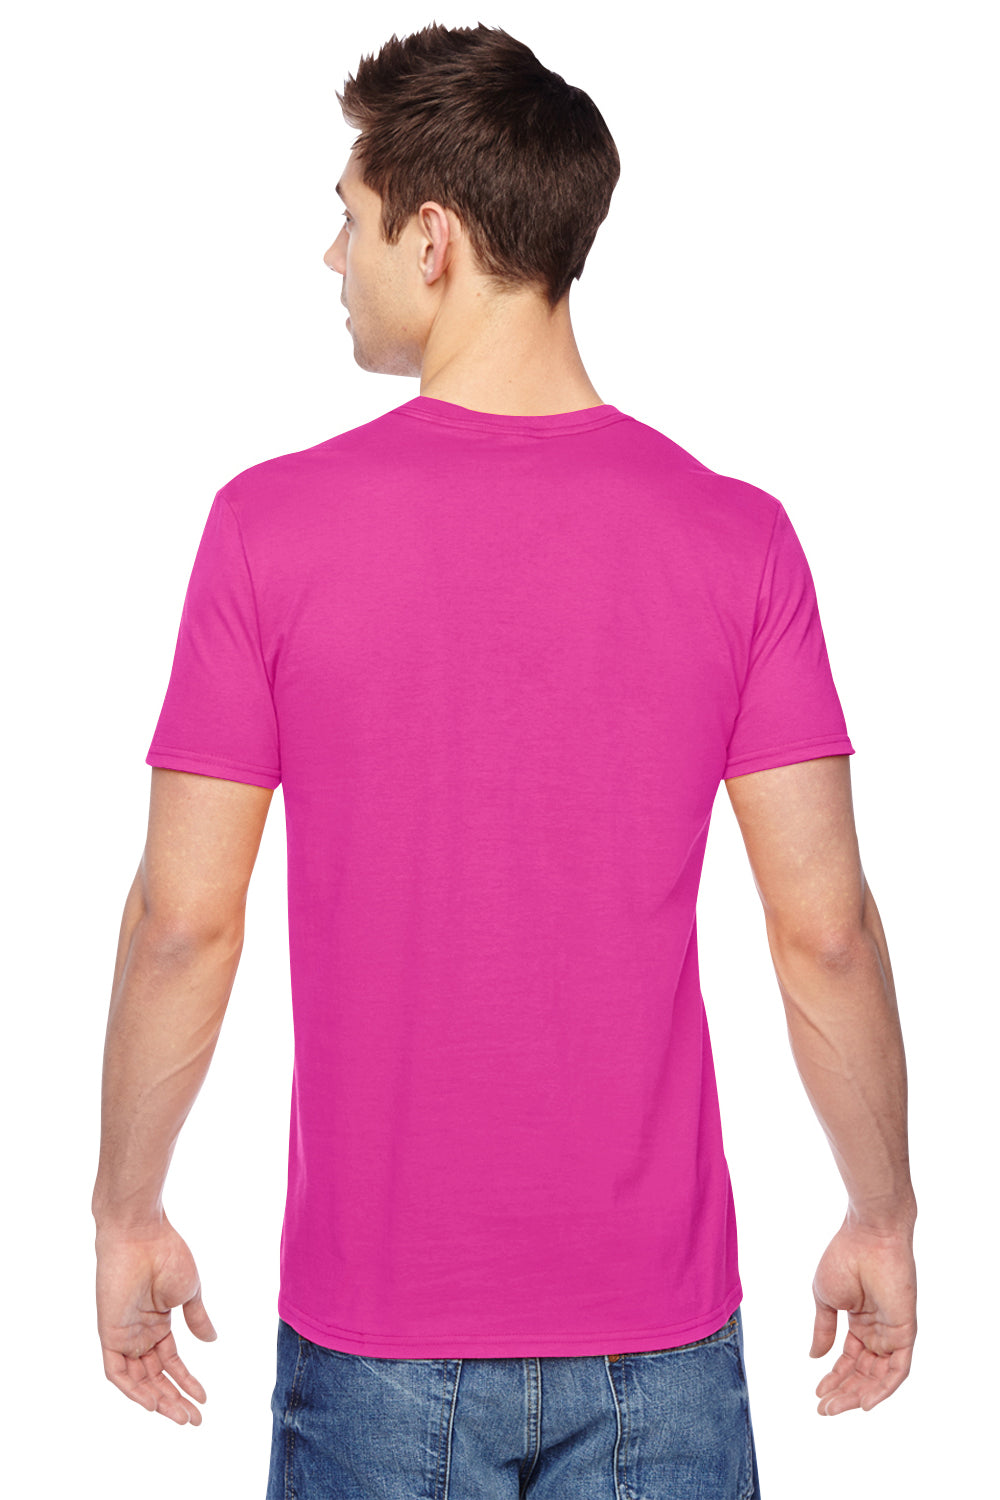 Fruit Of The Loom SF45R Mens Sofspun Jersey Short Sleeve Crewneck T-Shirt Cyber Pink Back